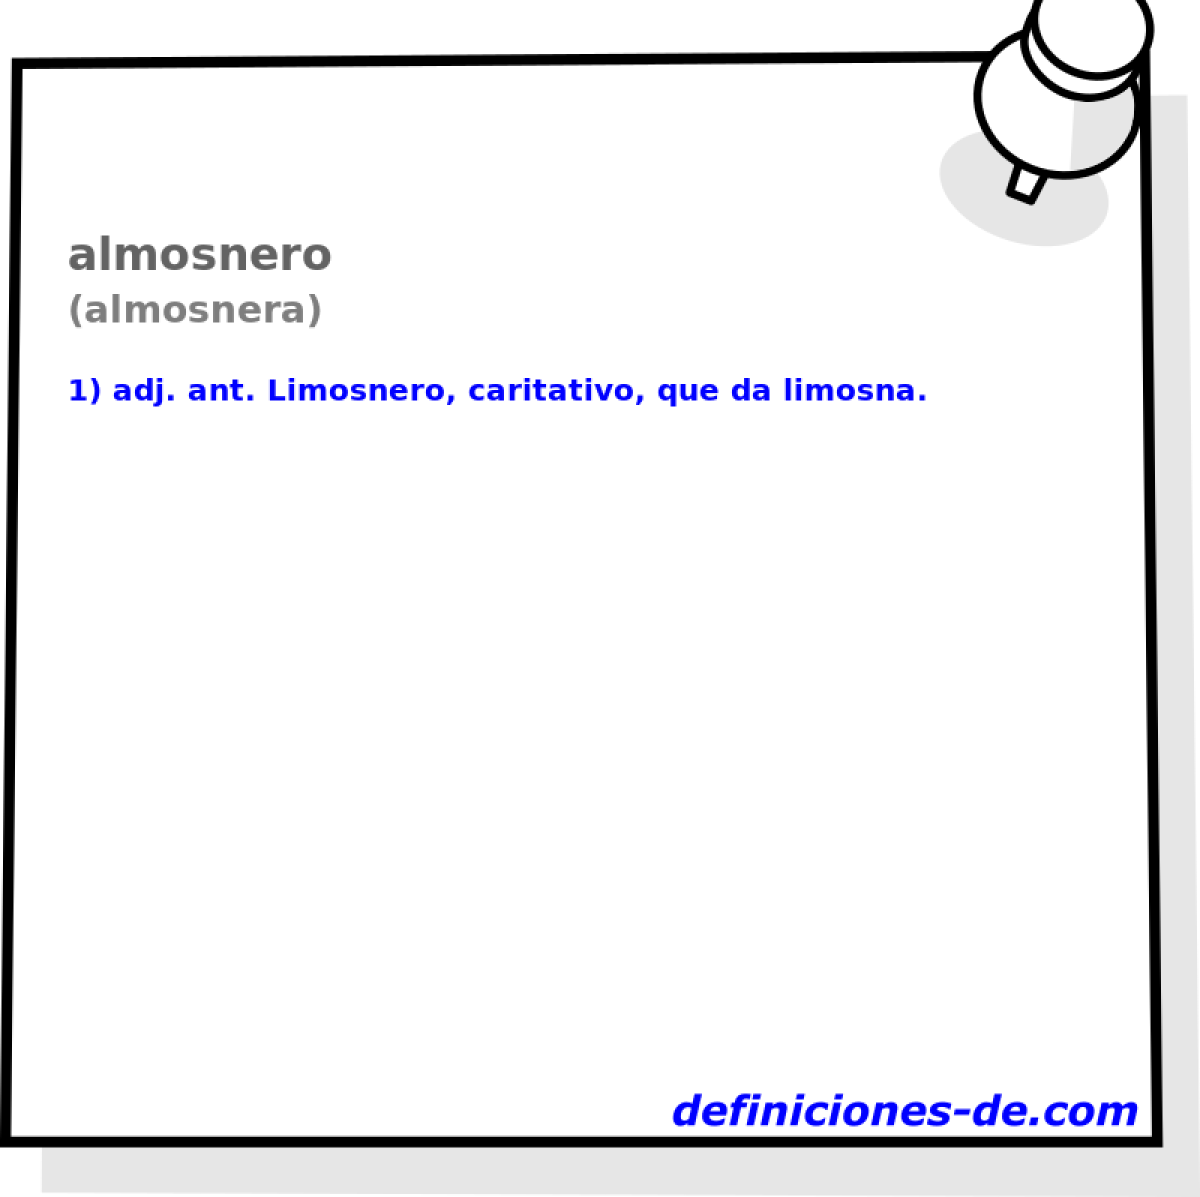 almosnero (almosnera)